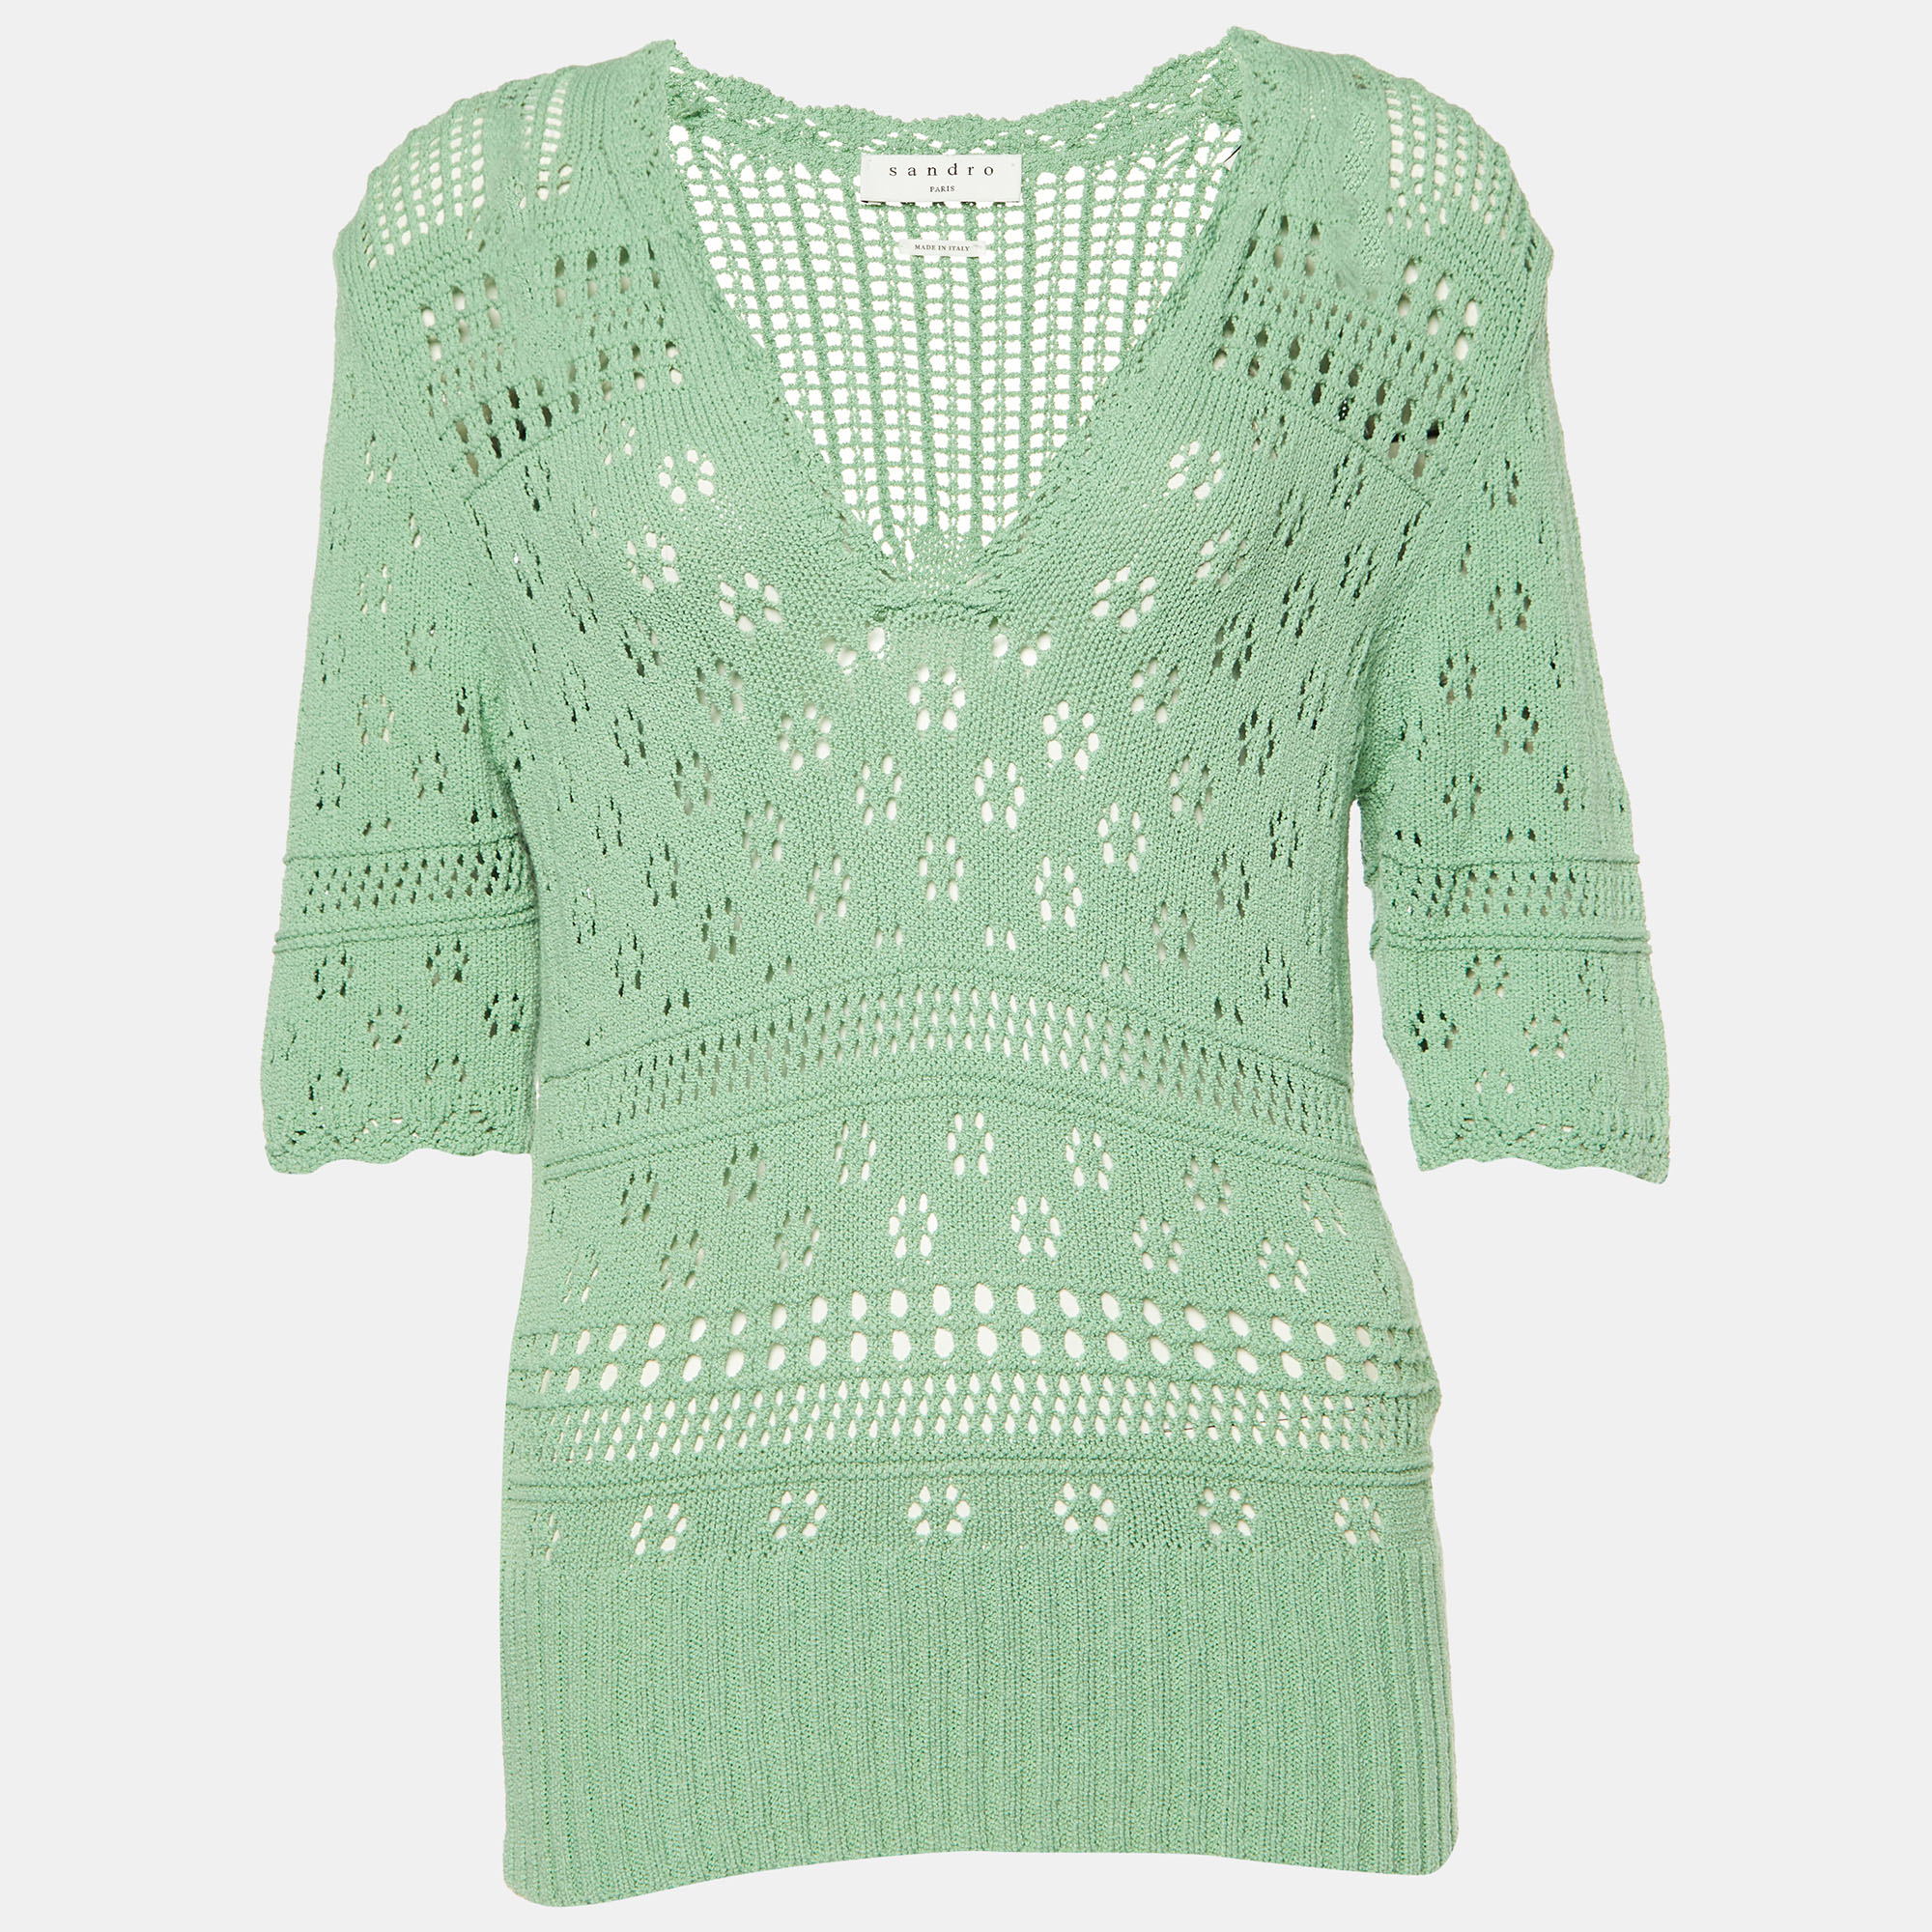 

Sandro Green Crochet Knit Top